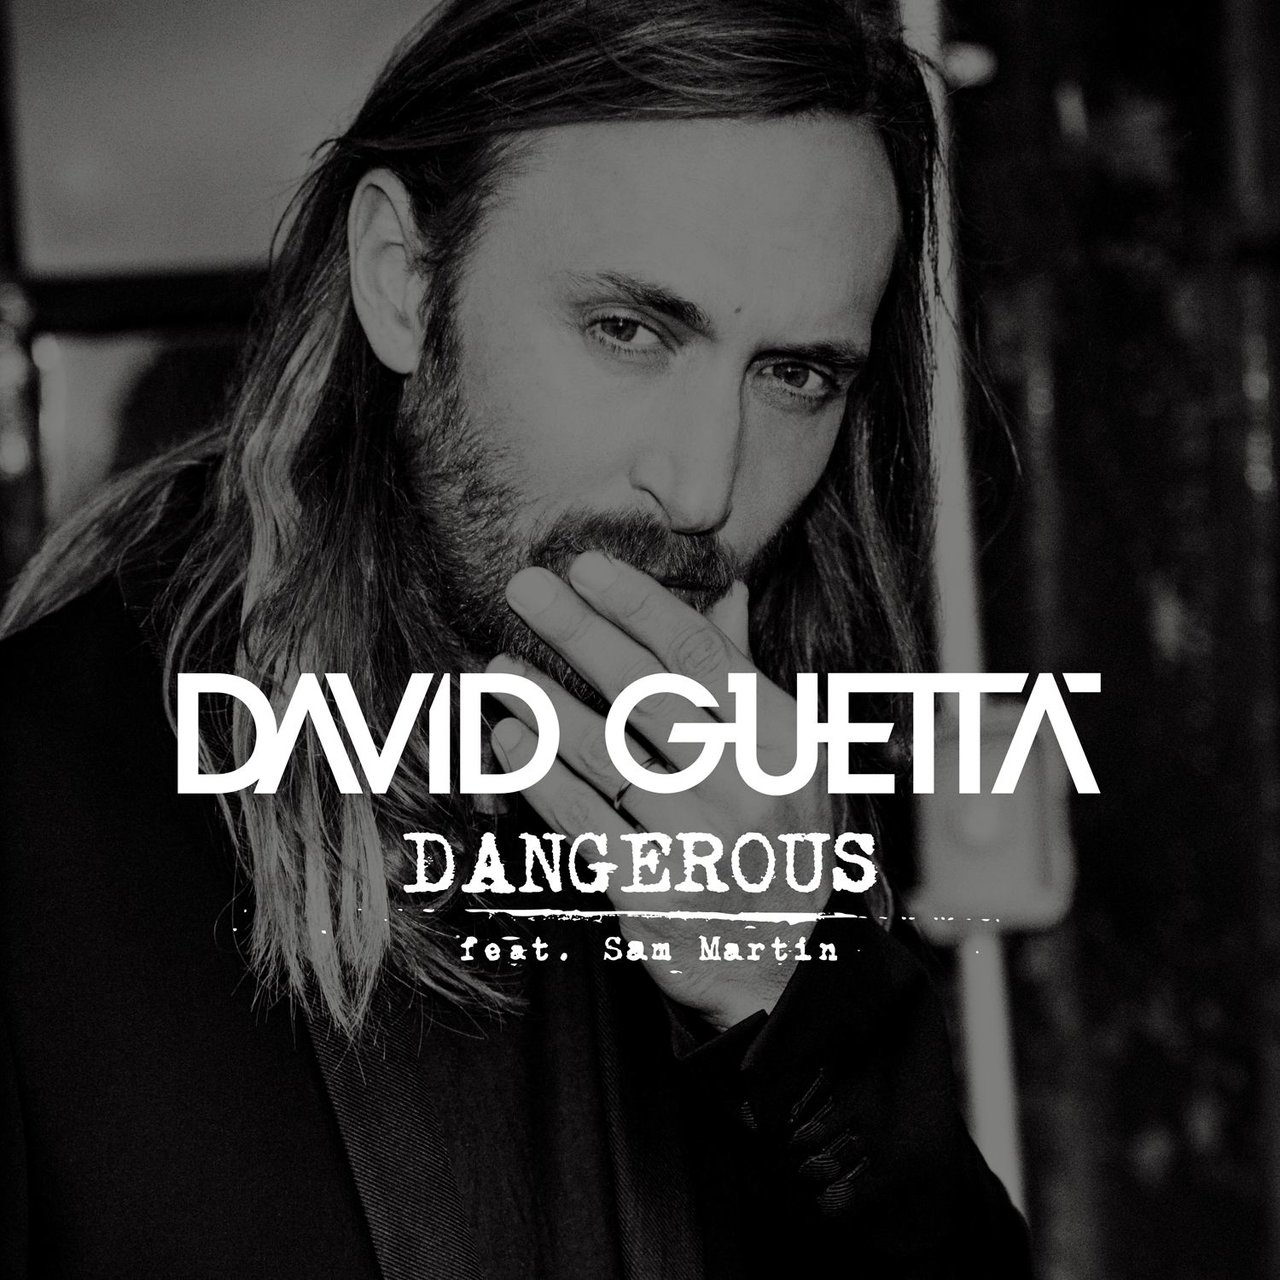 David Guetta featuring Sam Martin — Dangerous cover artwork